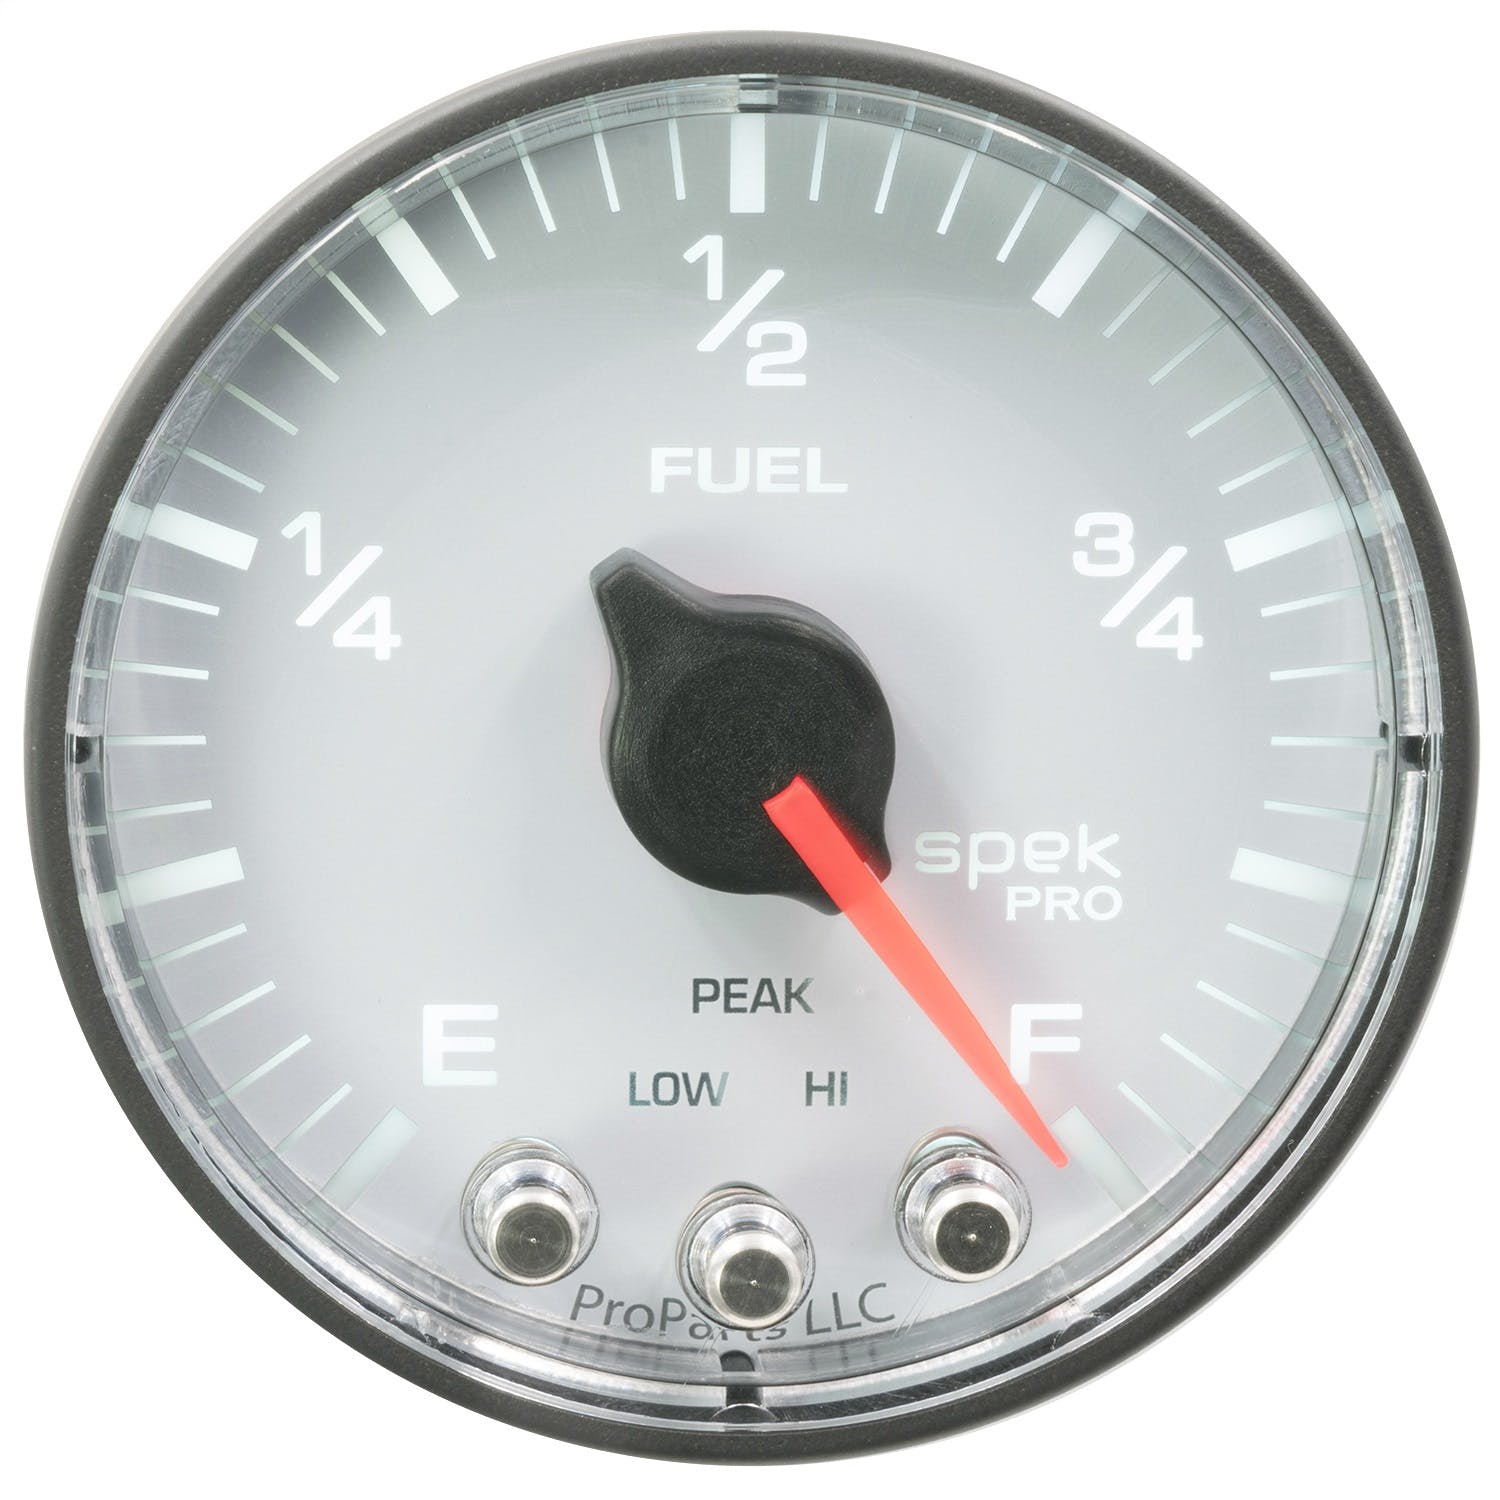 AutoMeter Products P312128 Spek Pro Fuel Level Gauge, 2 1/16, Programmable White/Black